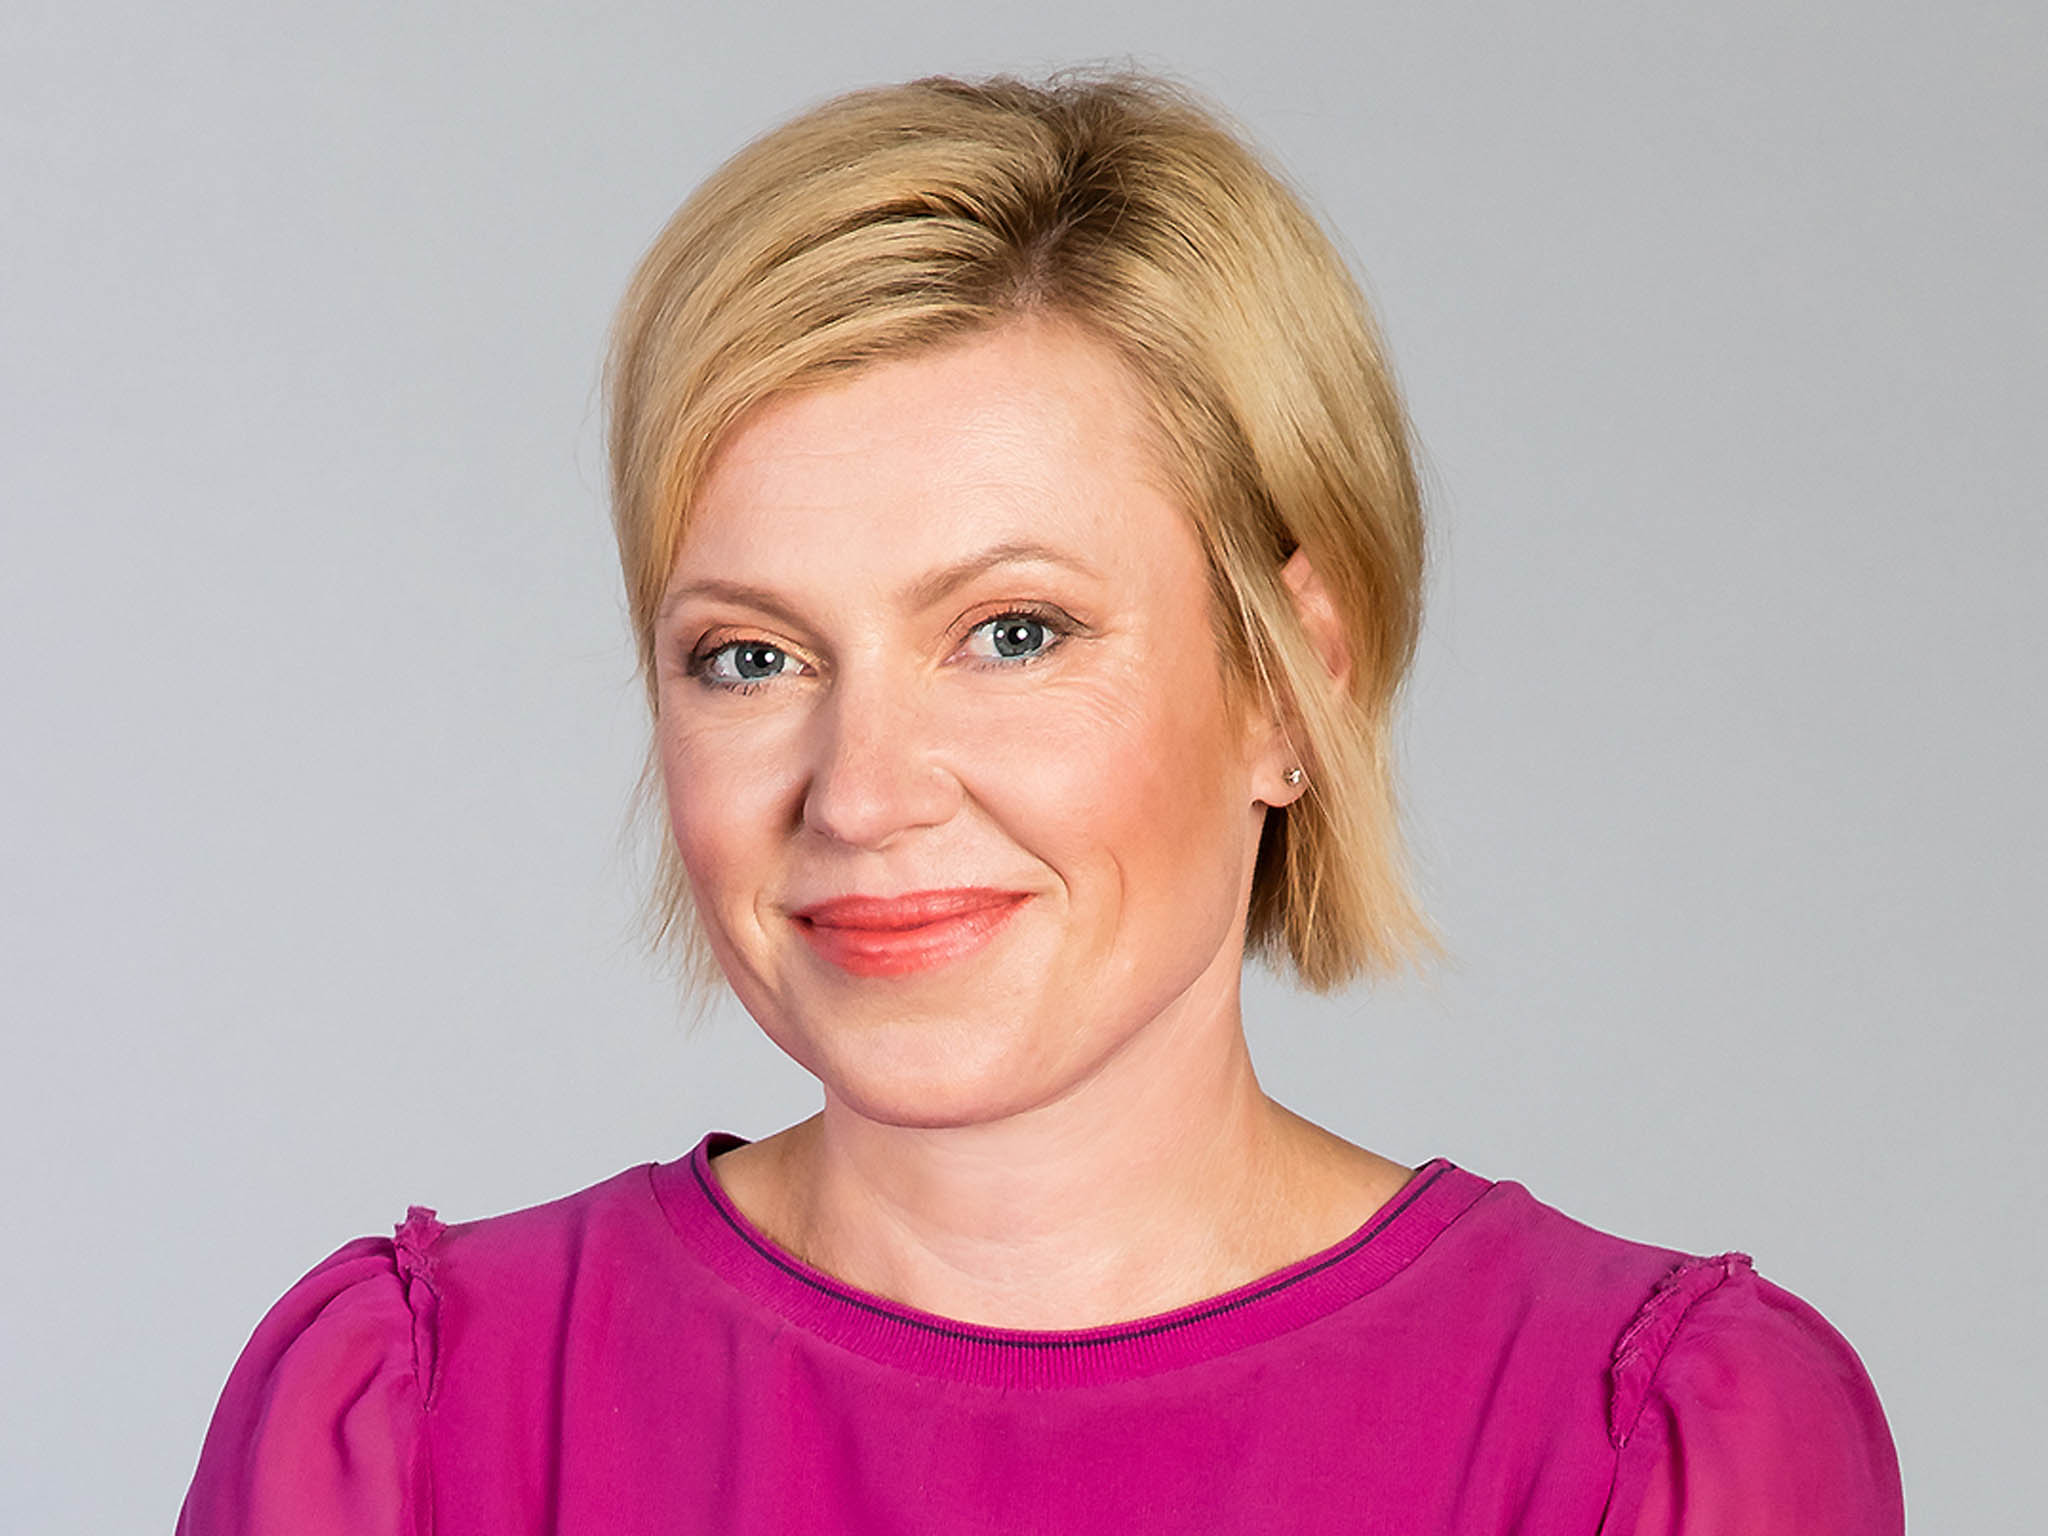 Zuzana Filipová, øeditelka komunikace a CSR spoleènosti Moneta Money Bank